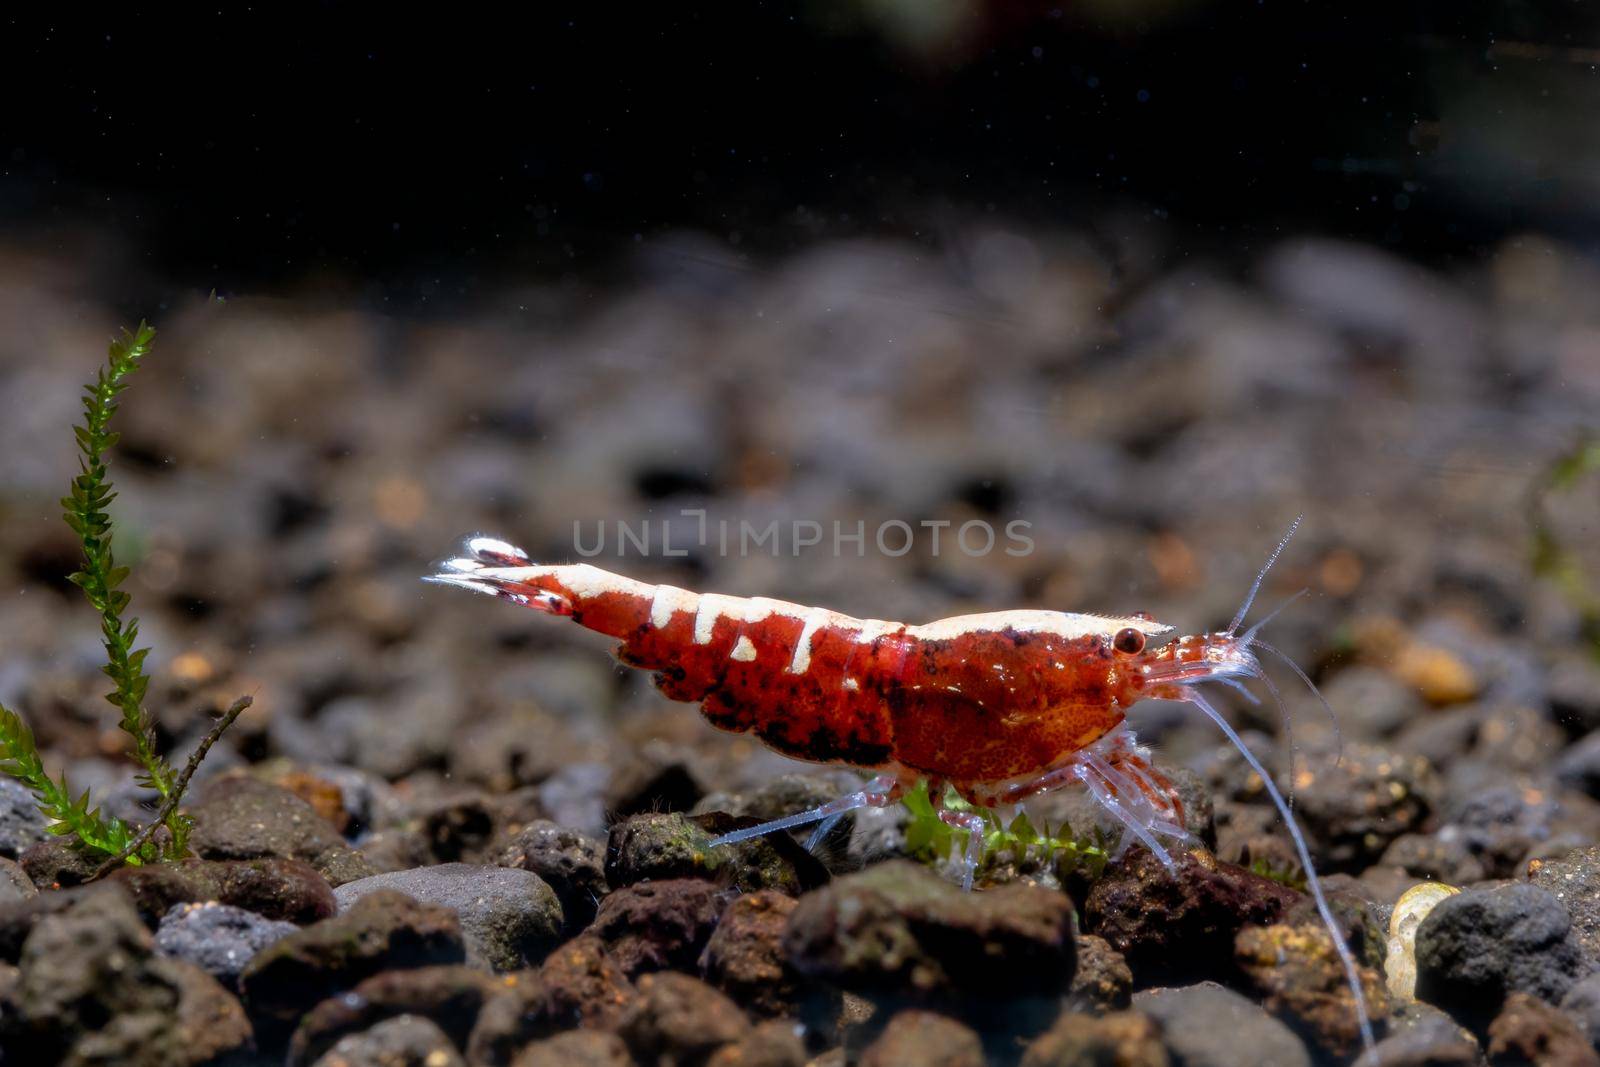 Red galaxy dwarf shrimp look for food in aquatic soil in freshwater aquarium tank.